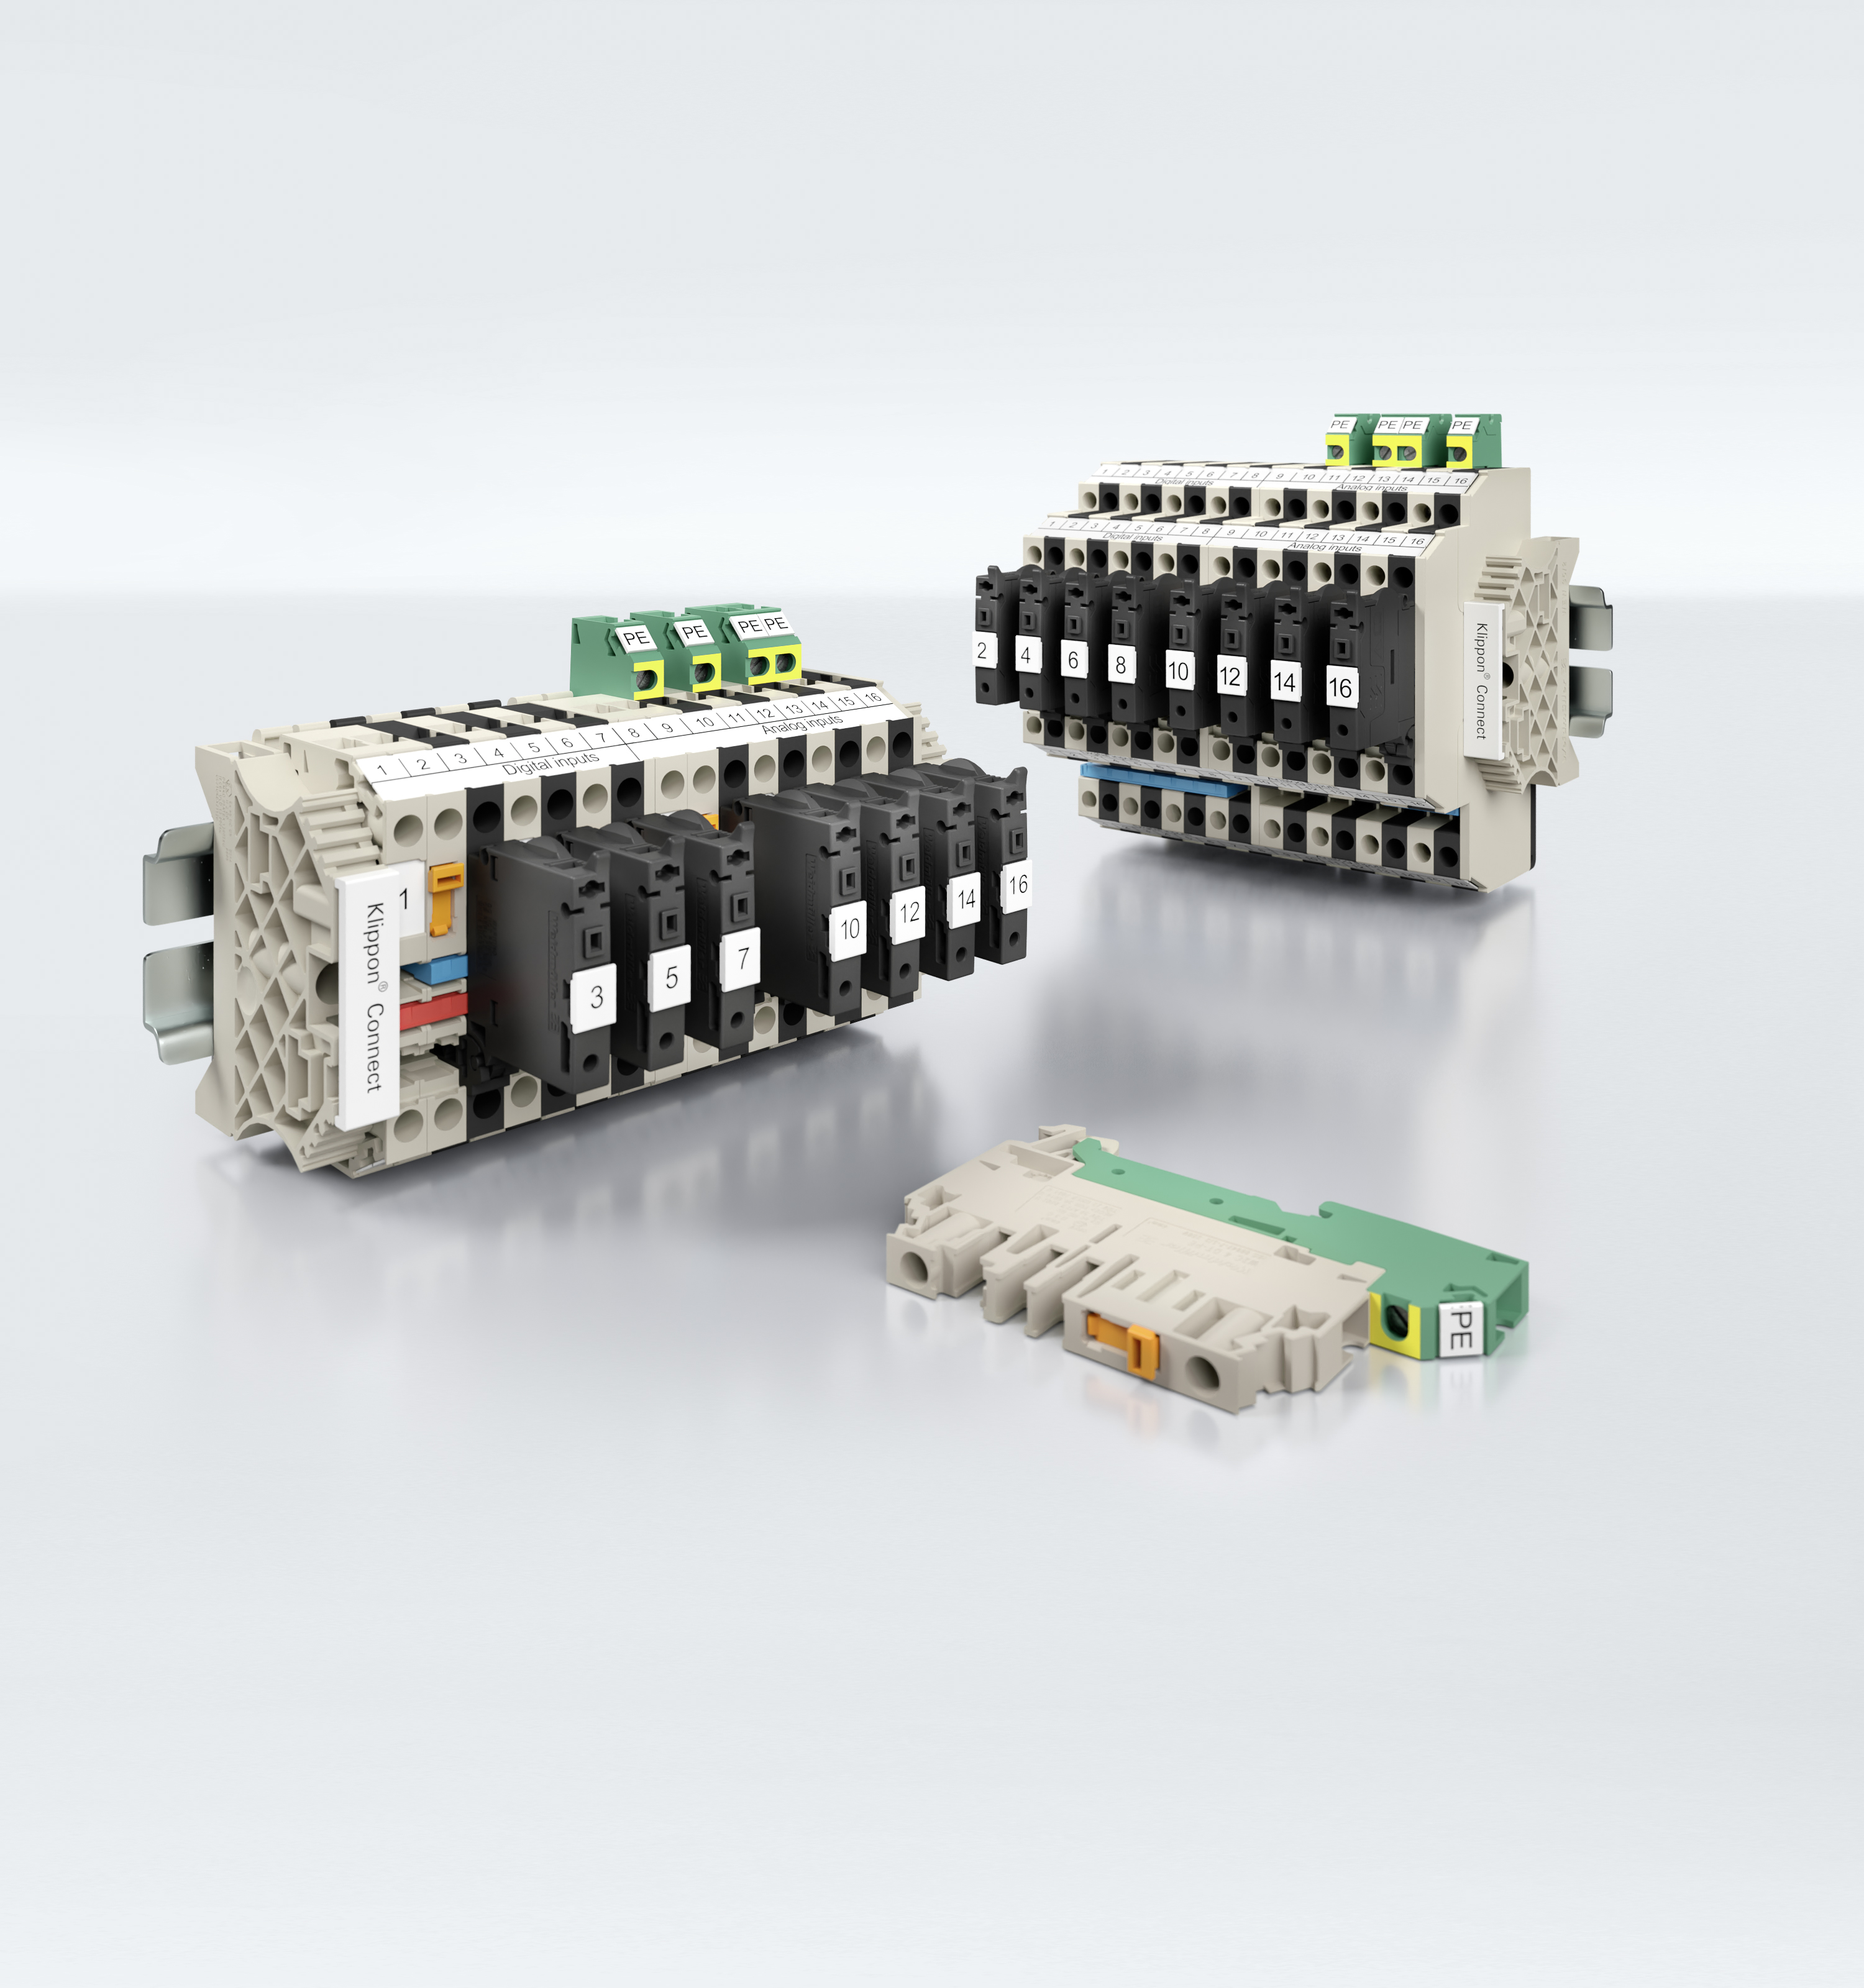 Signal wiring and signal marshalling terminal blocks